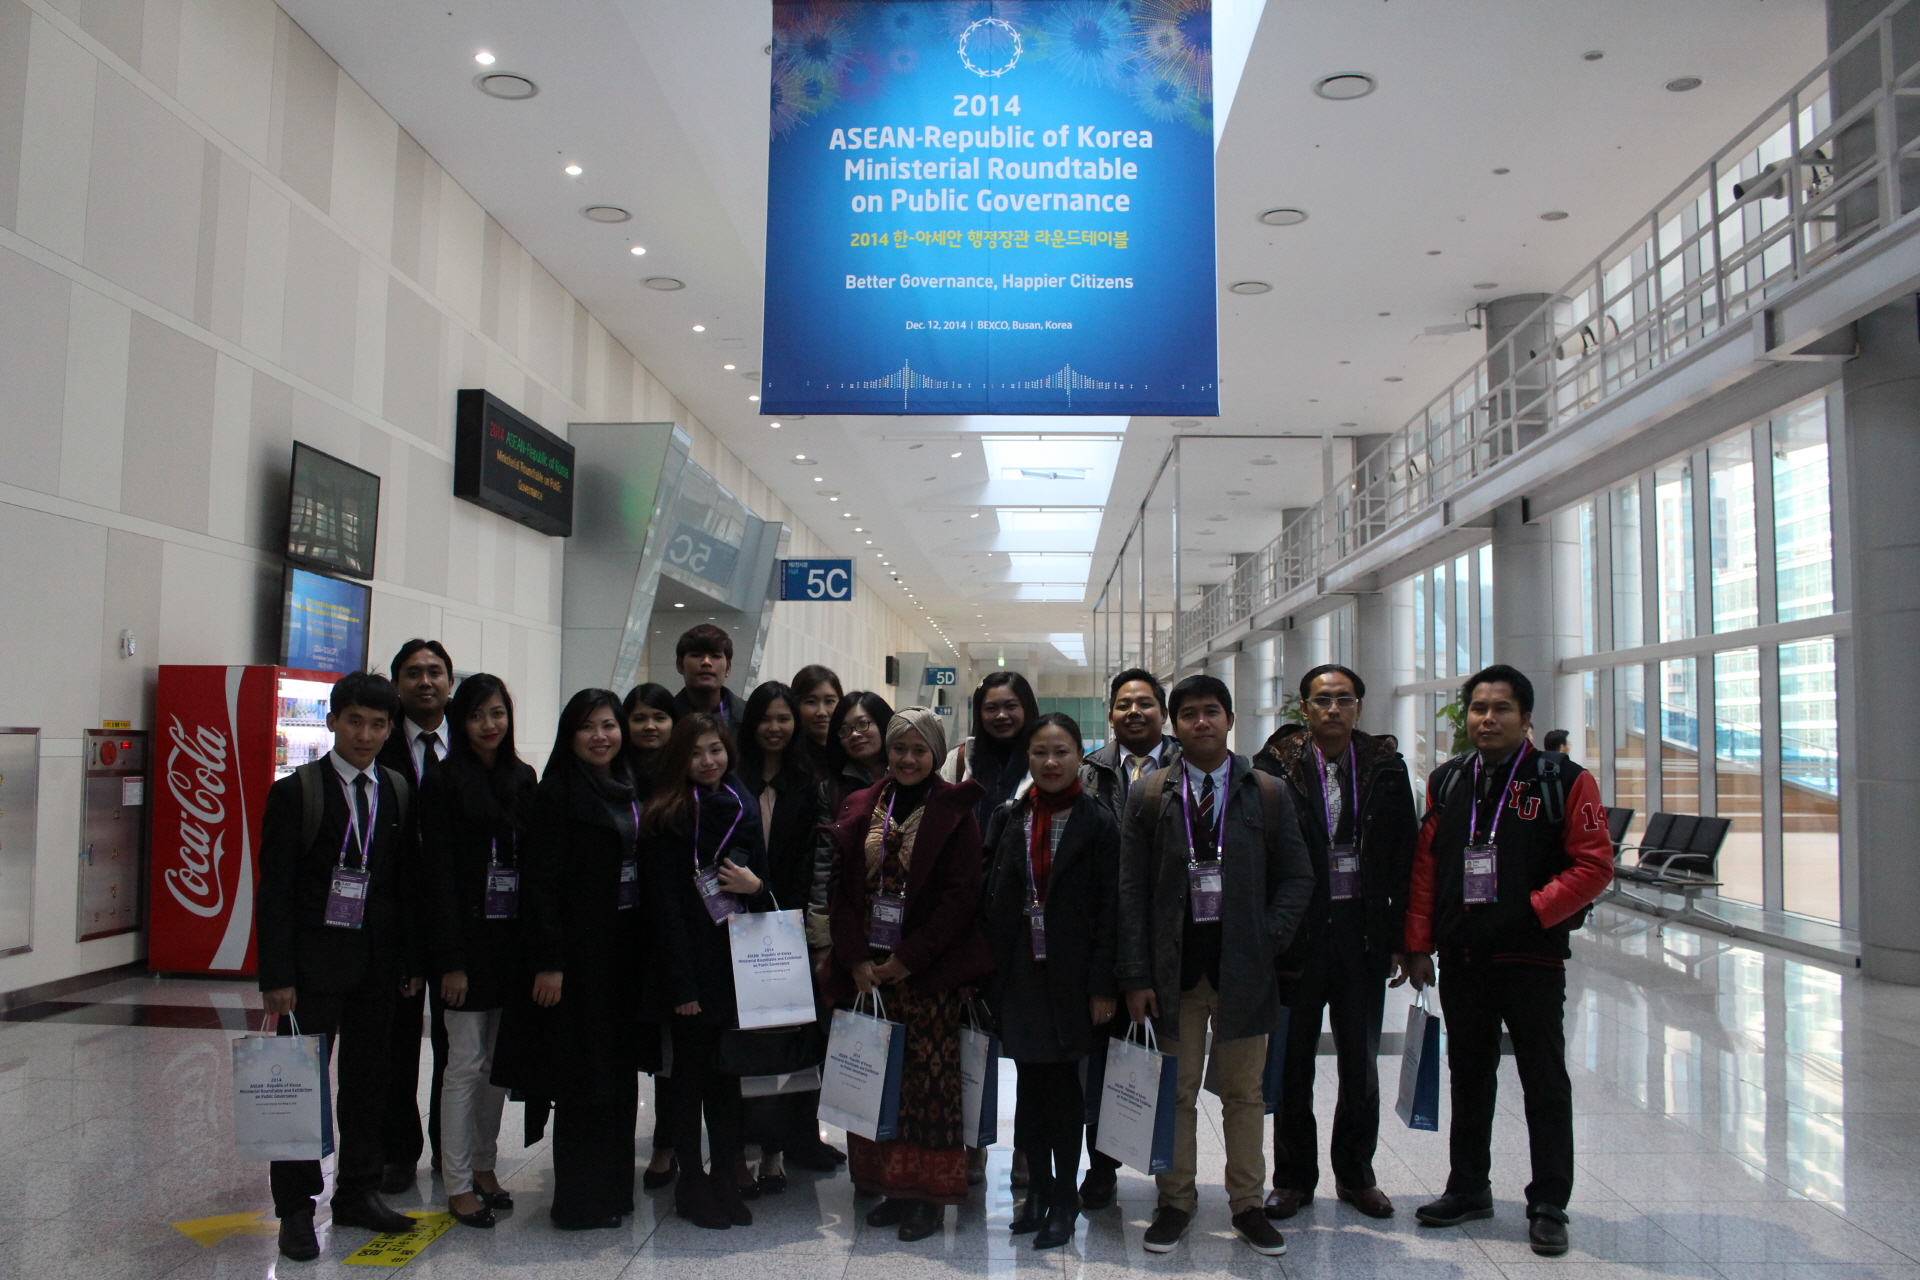 Korea-ASEAN Ministerial Roundtable12 Dec 2014